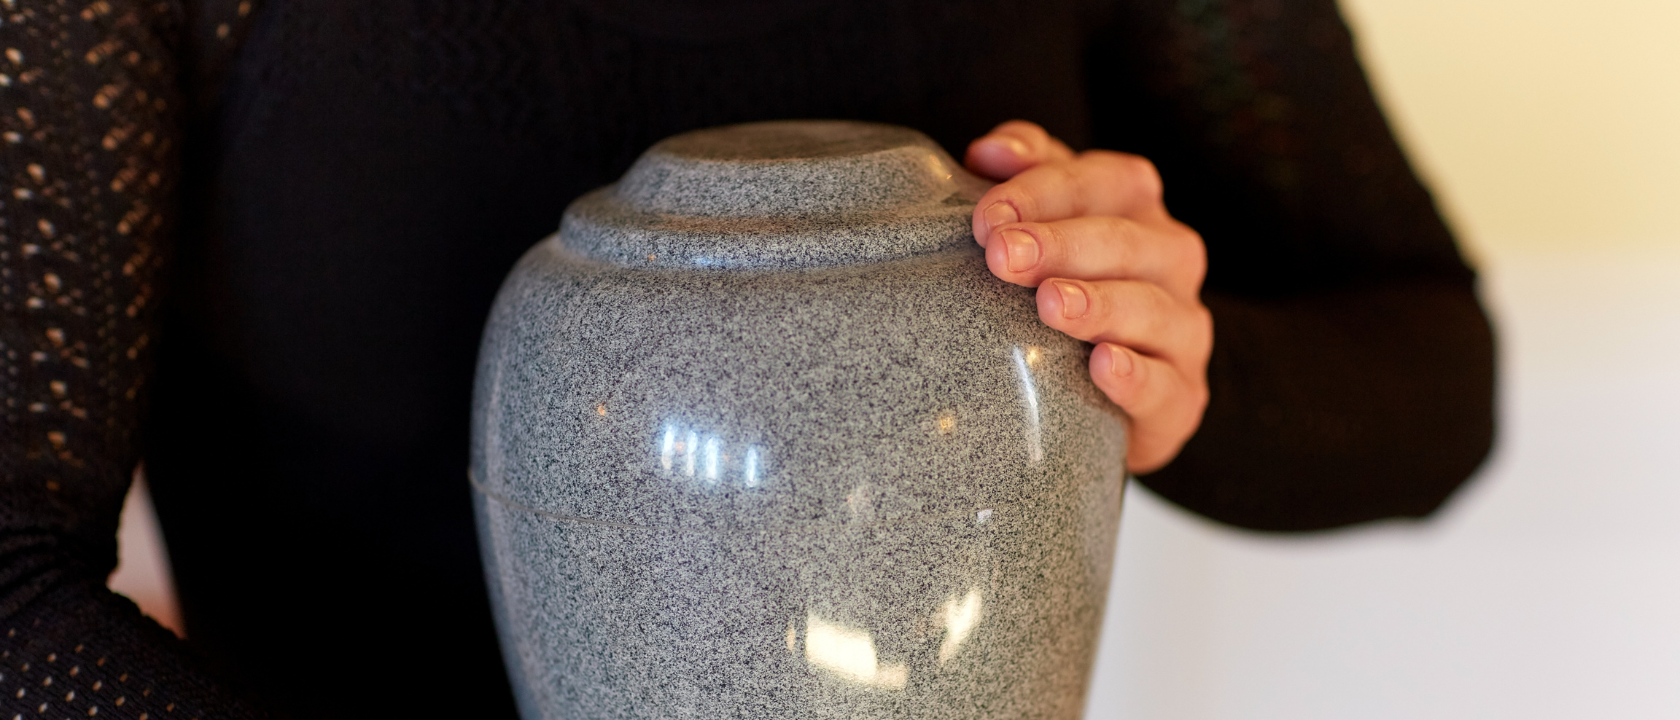 Urn with Alkaline Hydrolysis Cremains